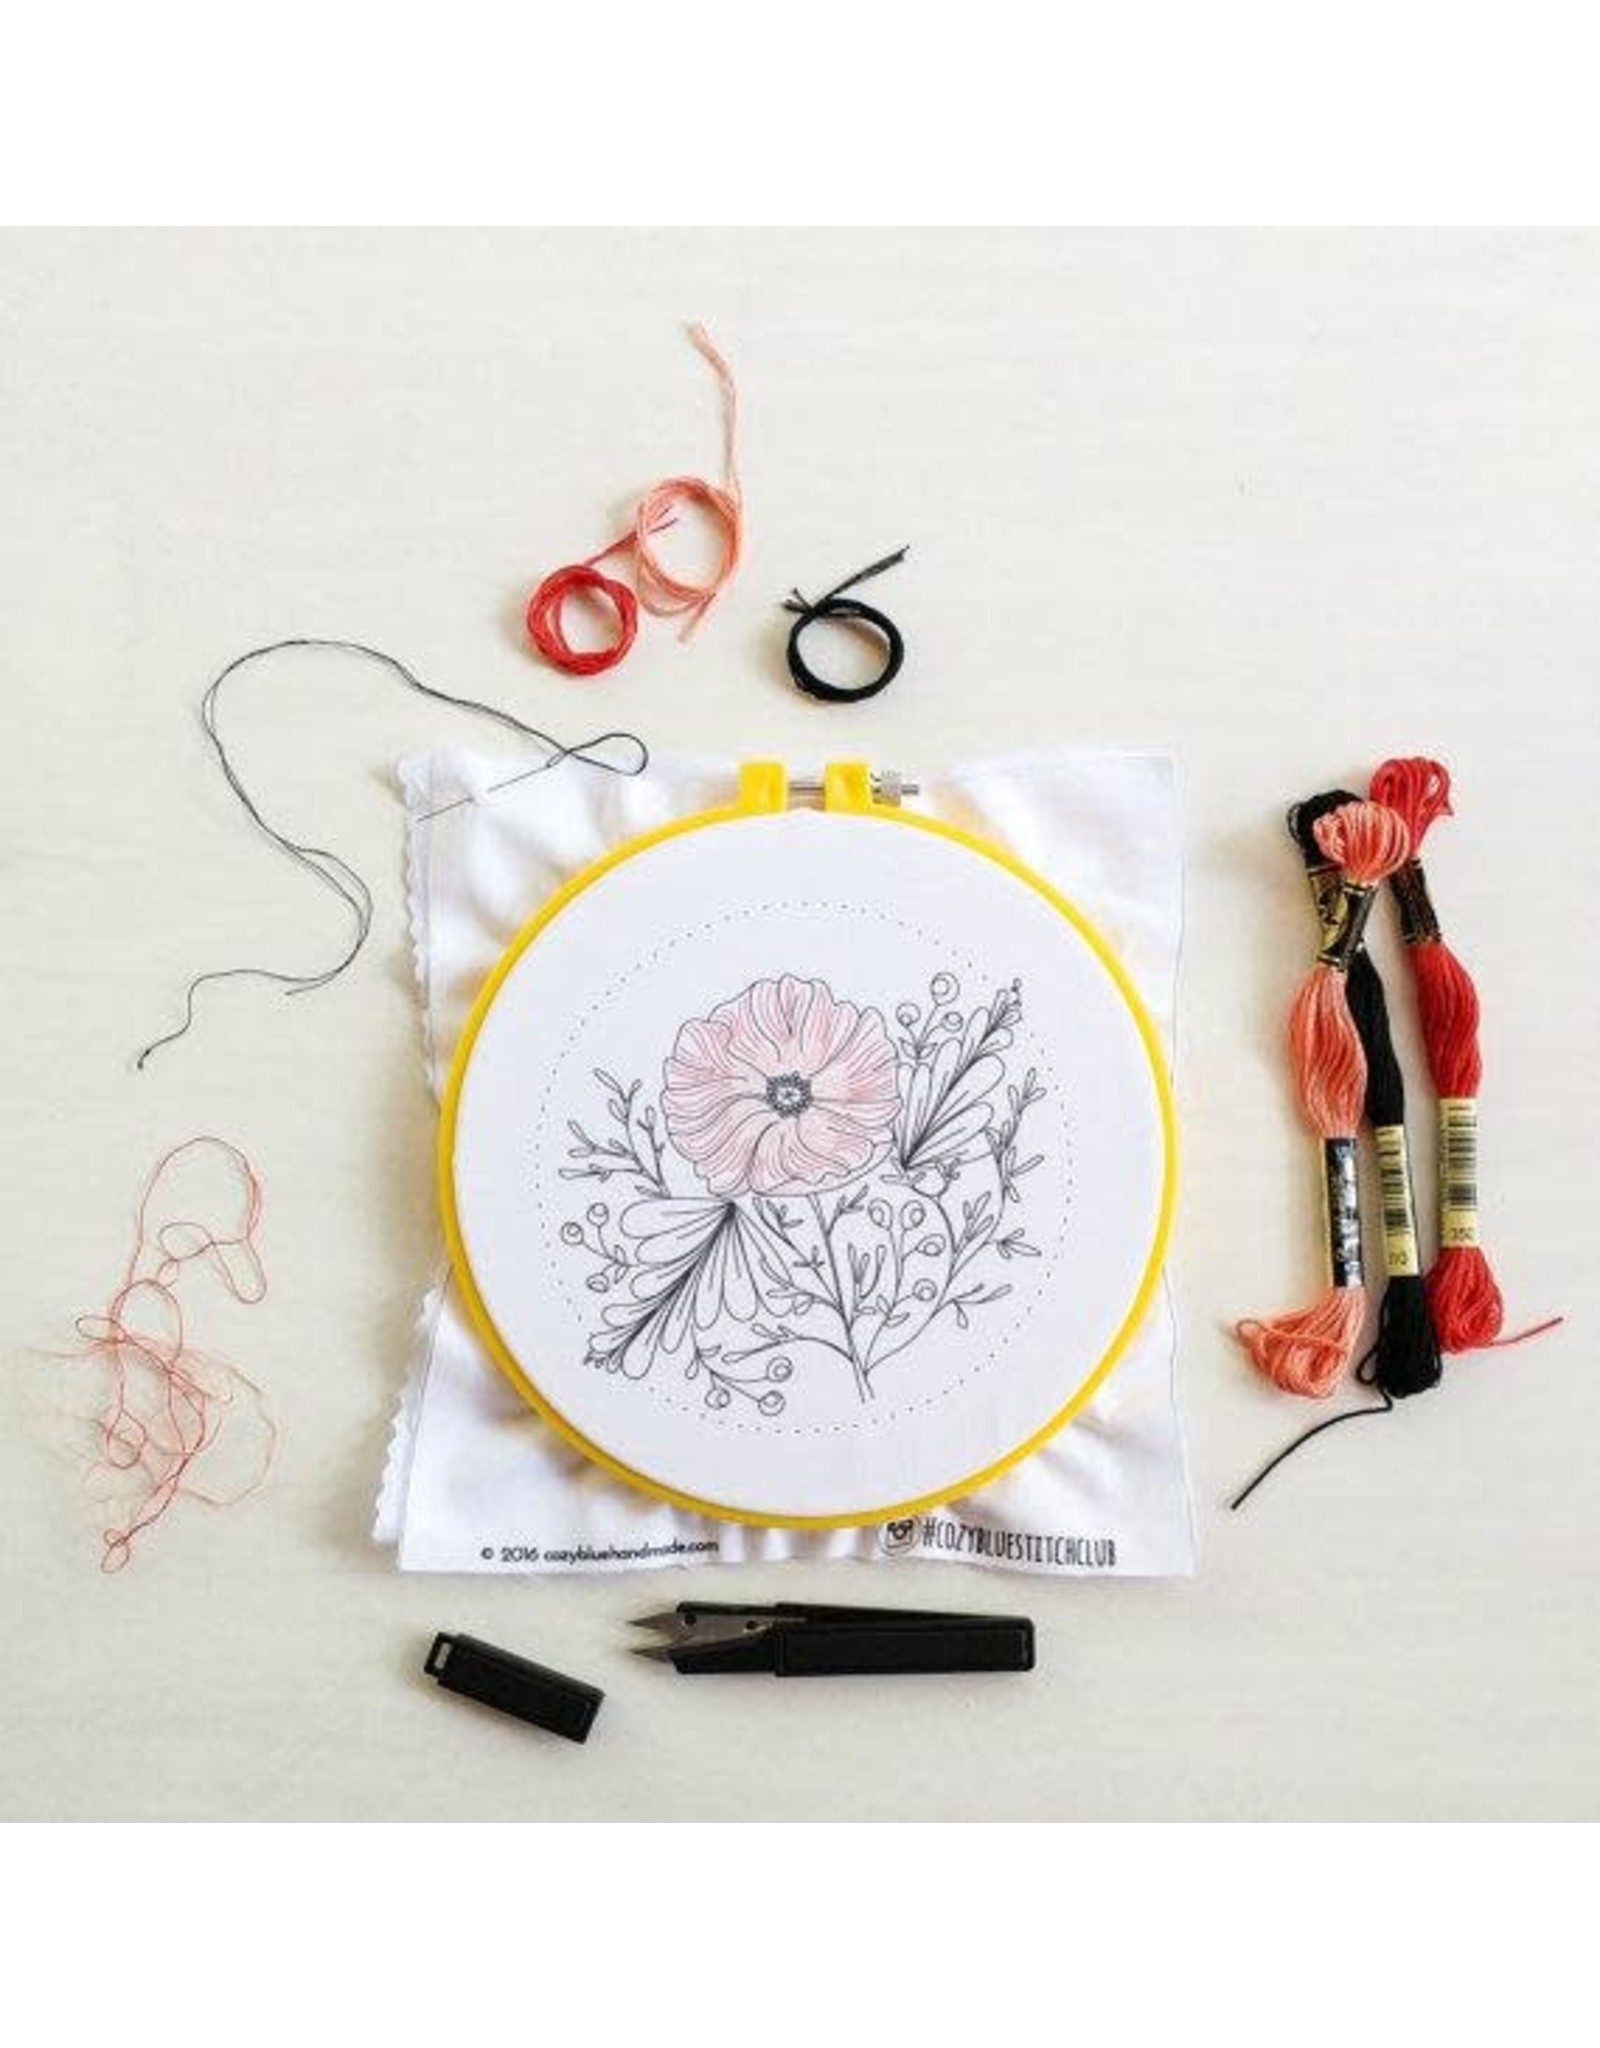 cozyblue Poppy Power Embroidery Kit from cozyblue